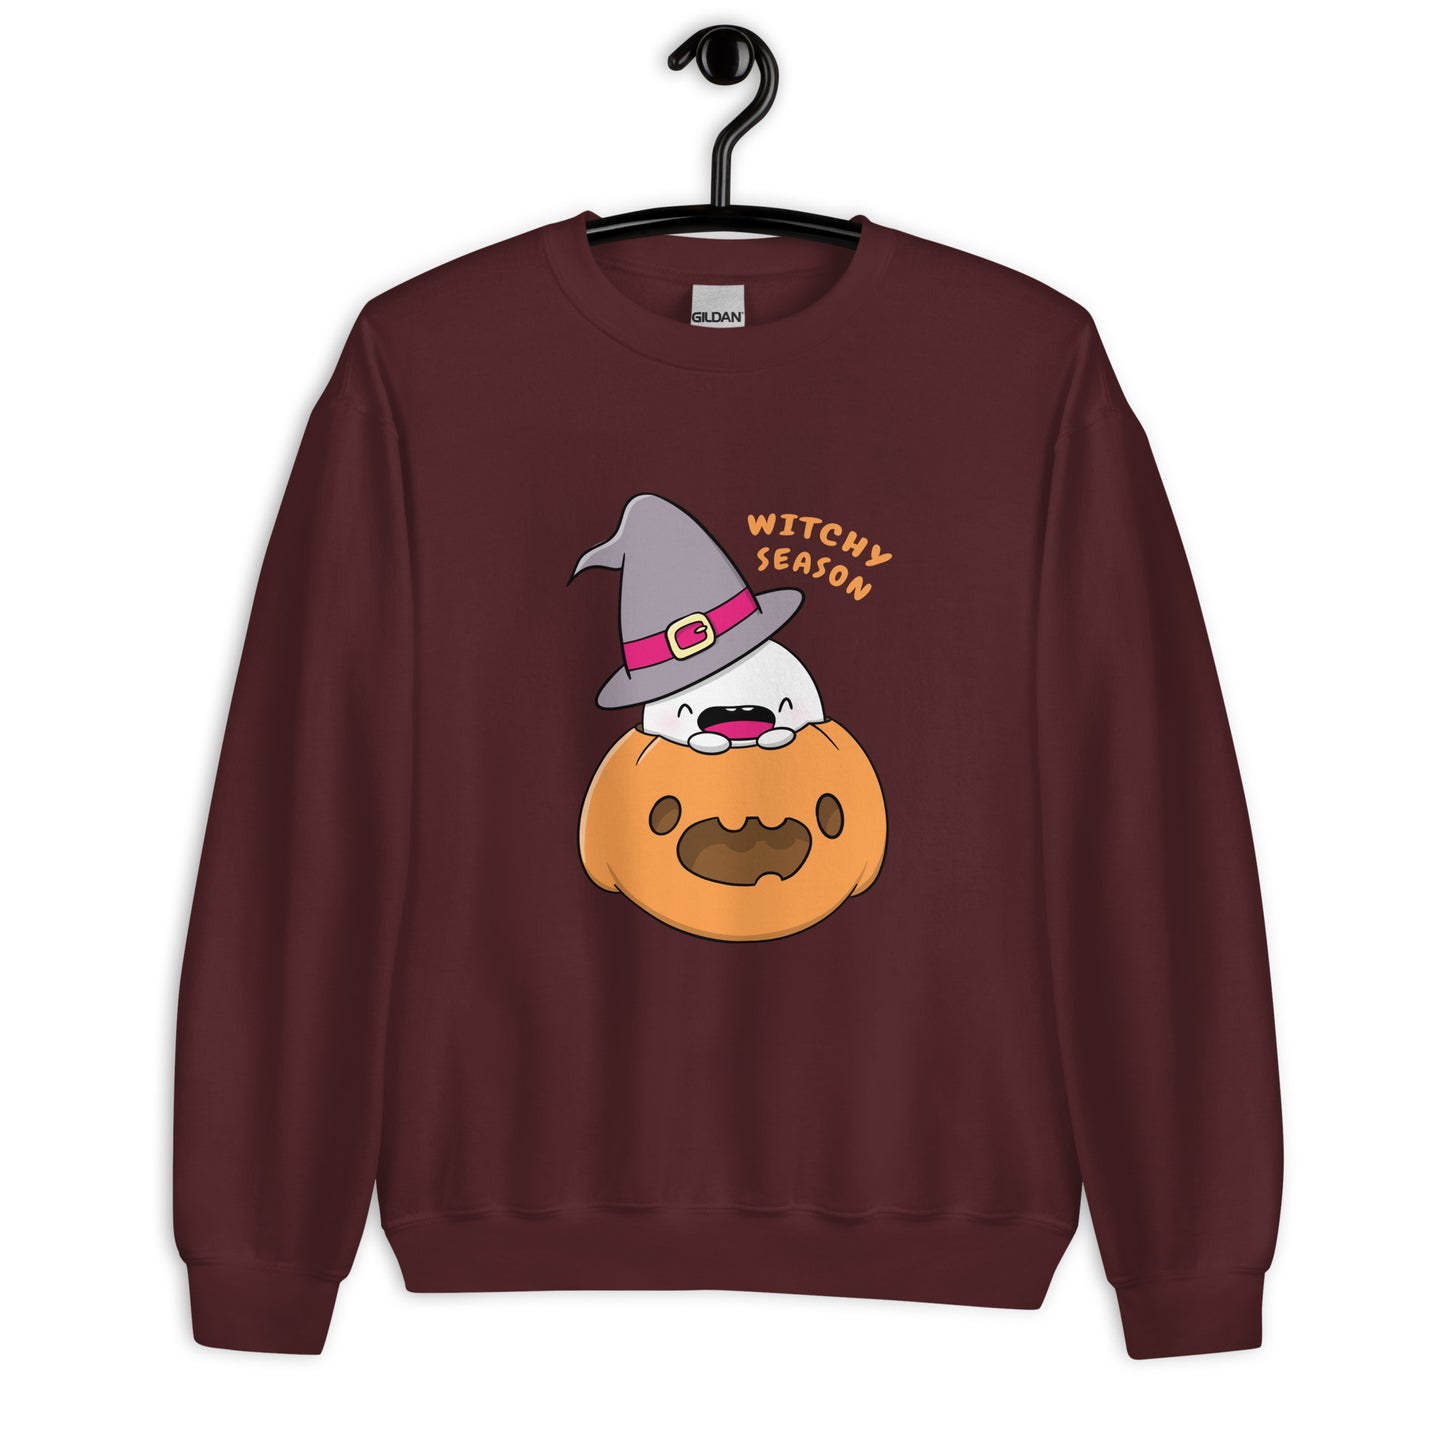 Witchy season - Unisex Sweatshirt